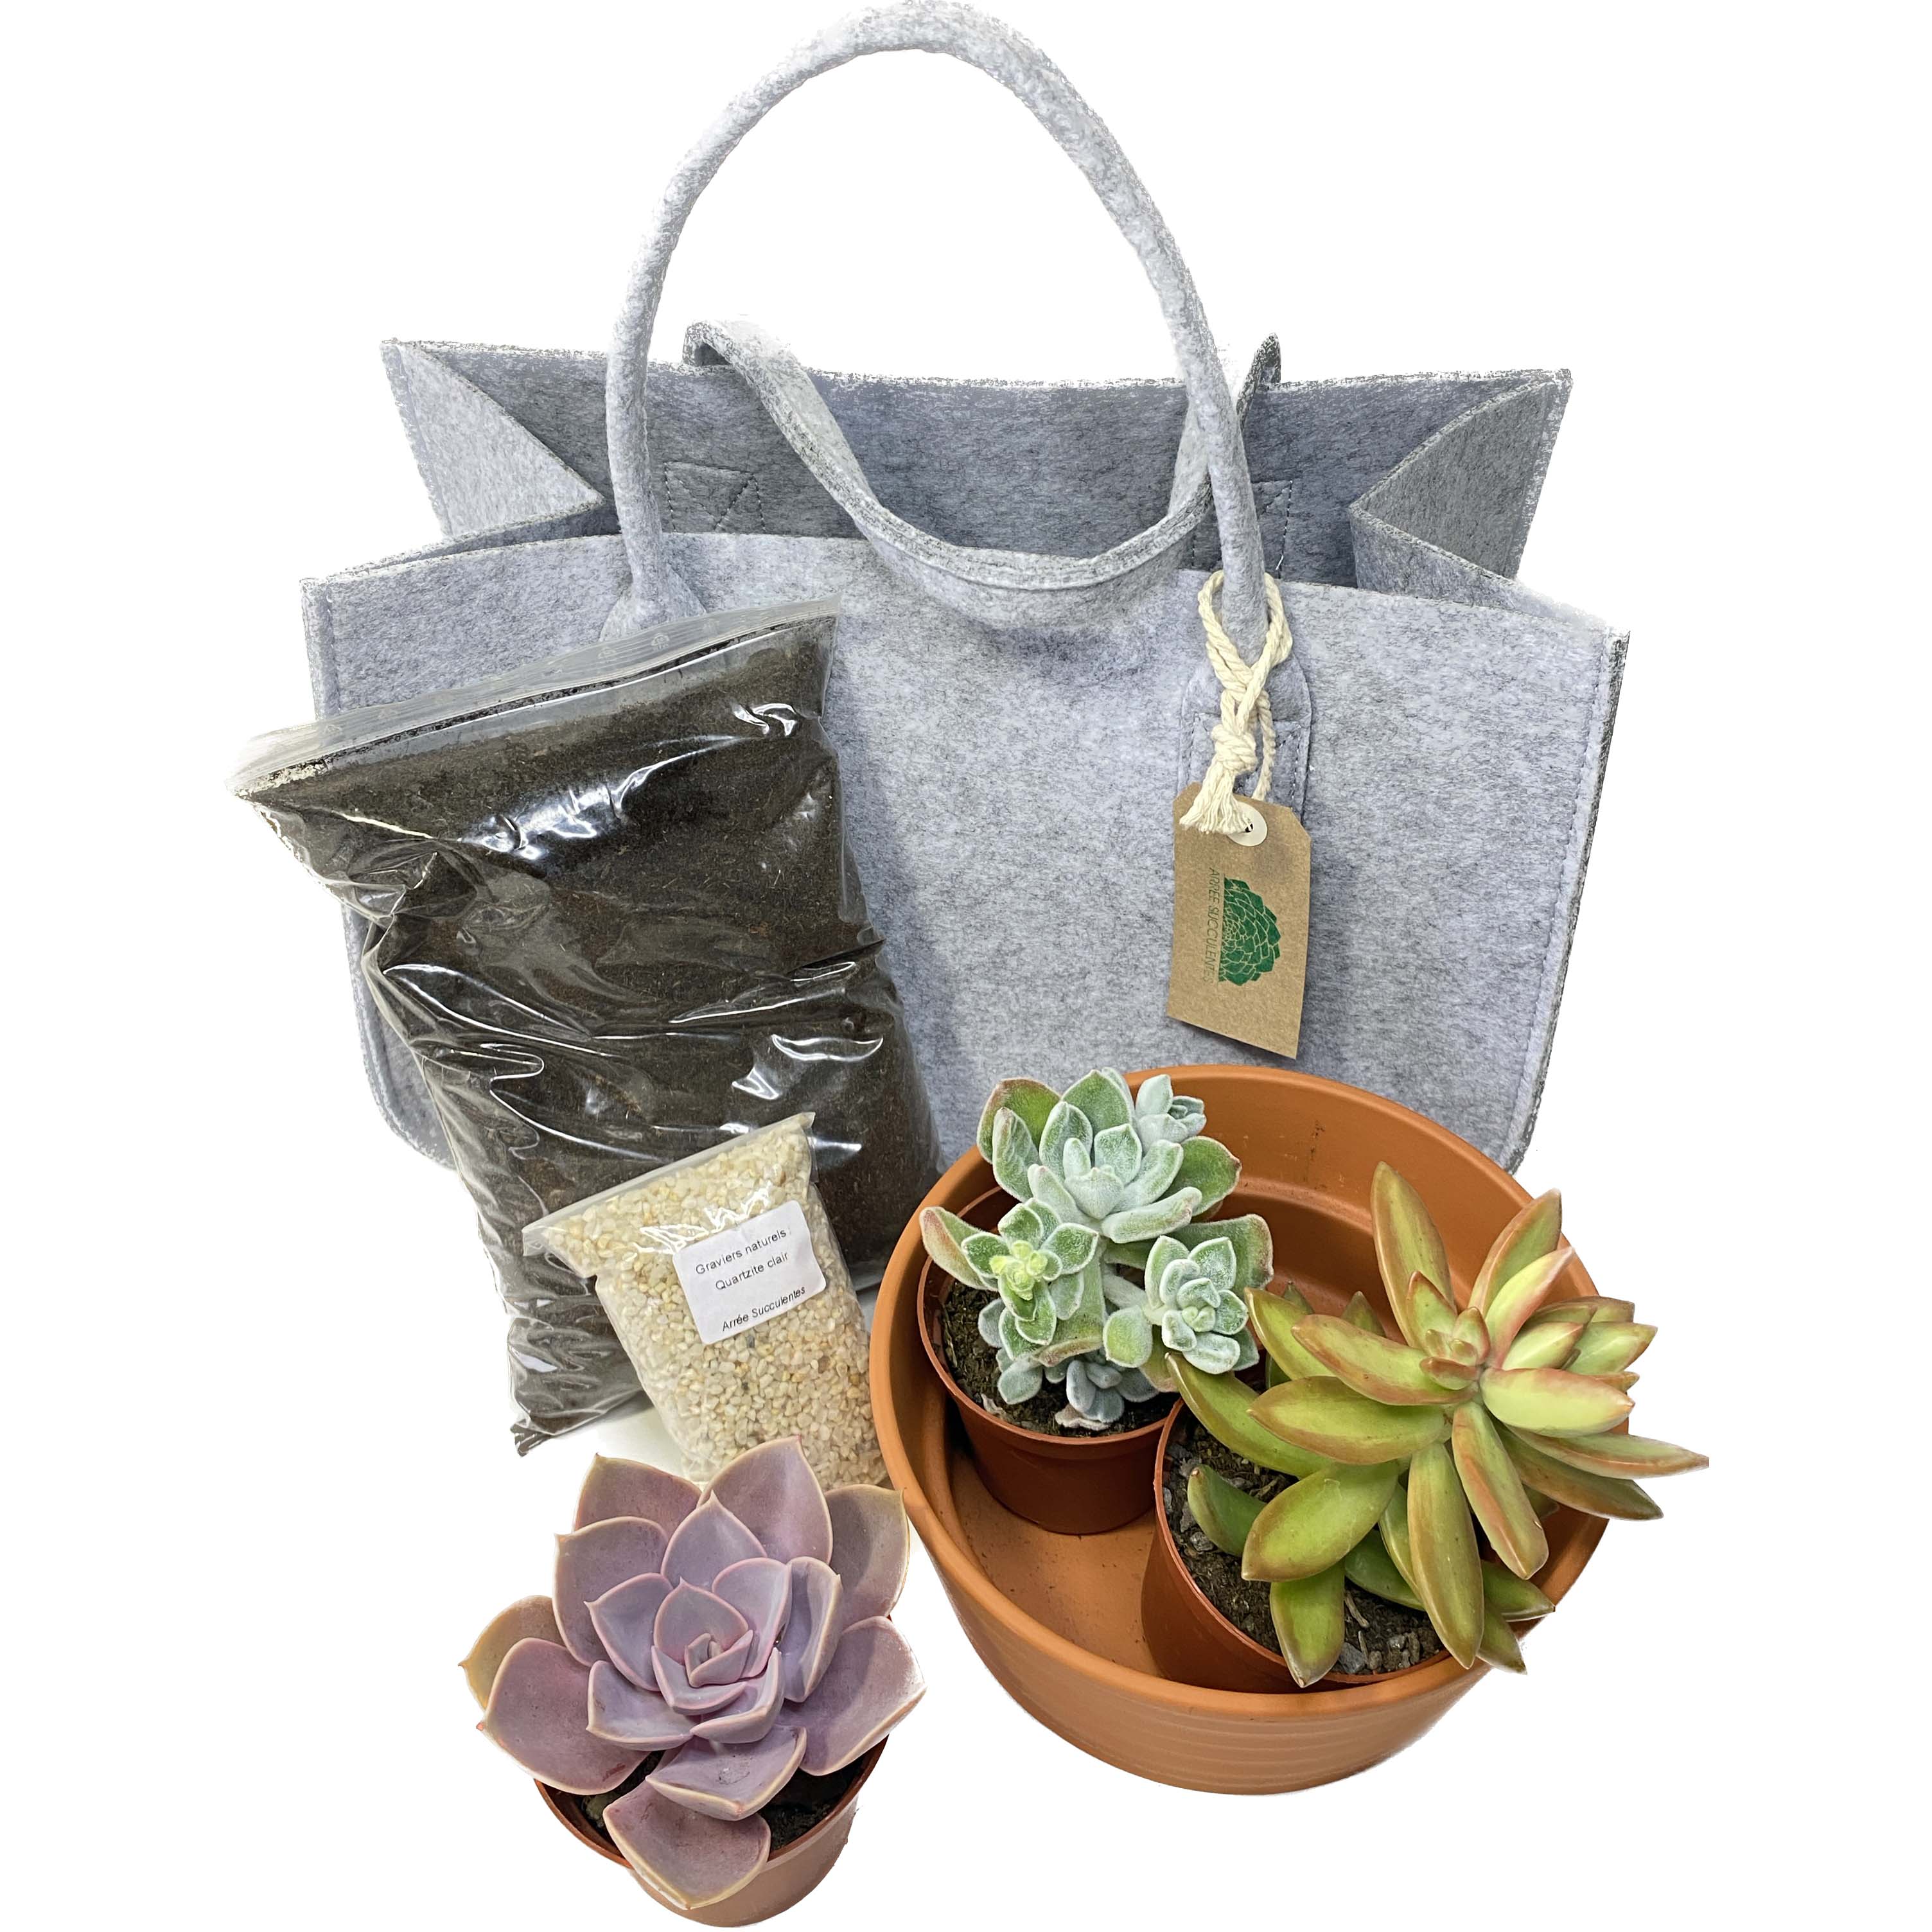 3x sac de plantes accessoires de plantes sac de plantes sac de